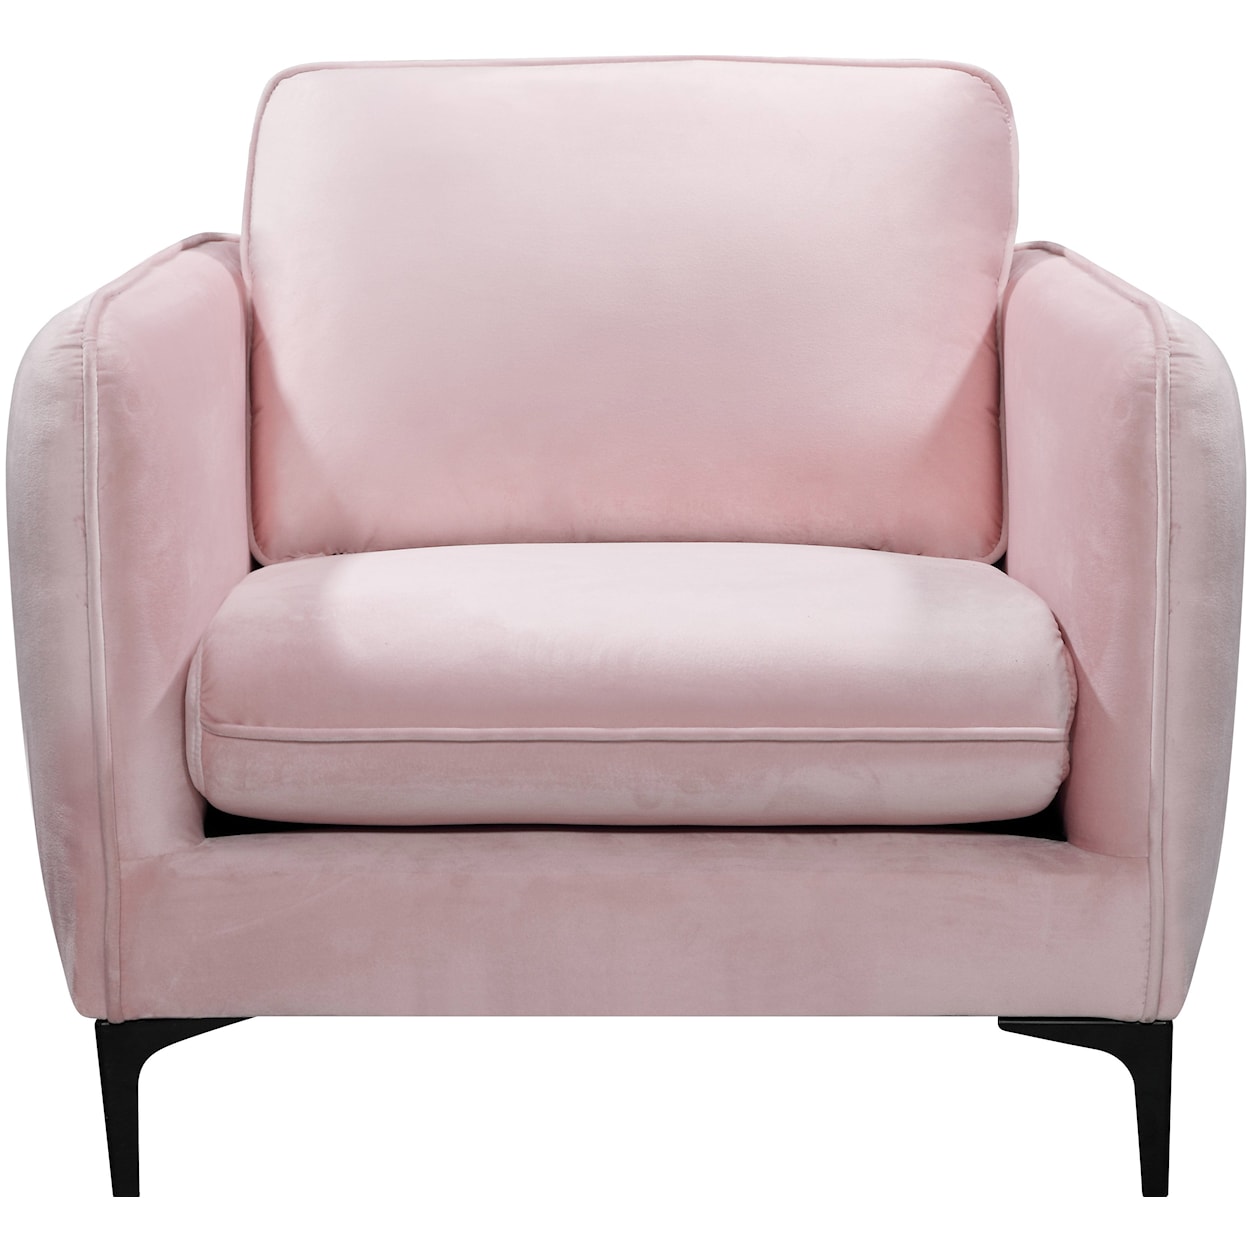 Meridian Furniture Poppy Chair